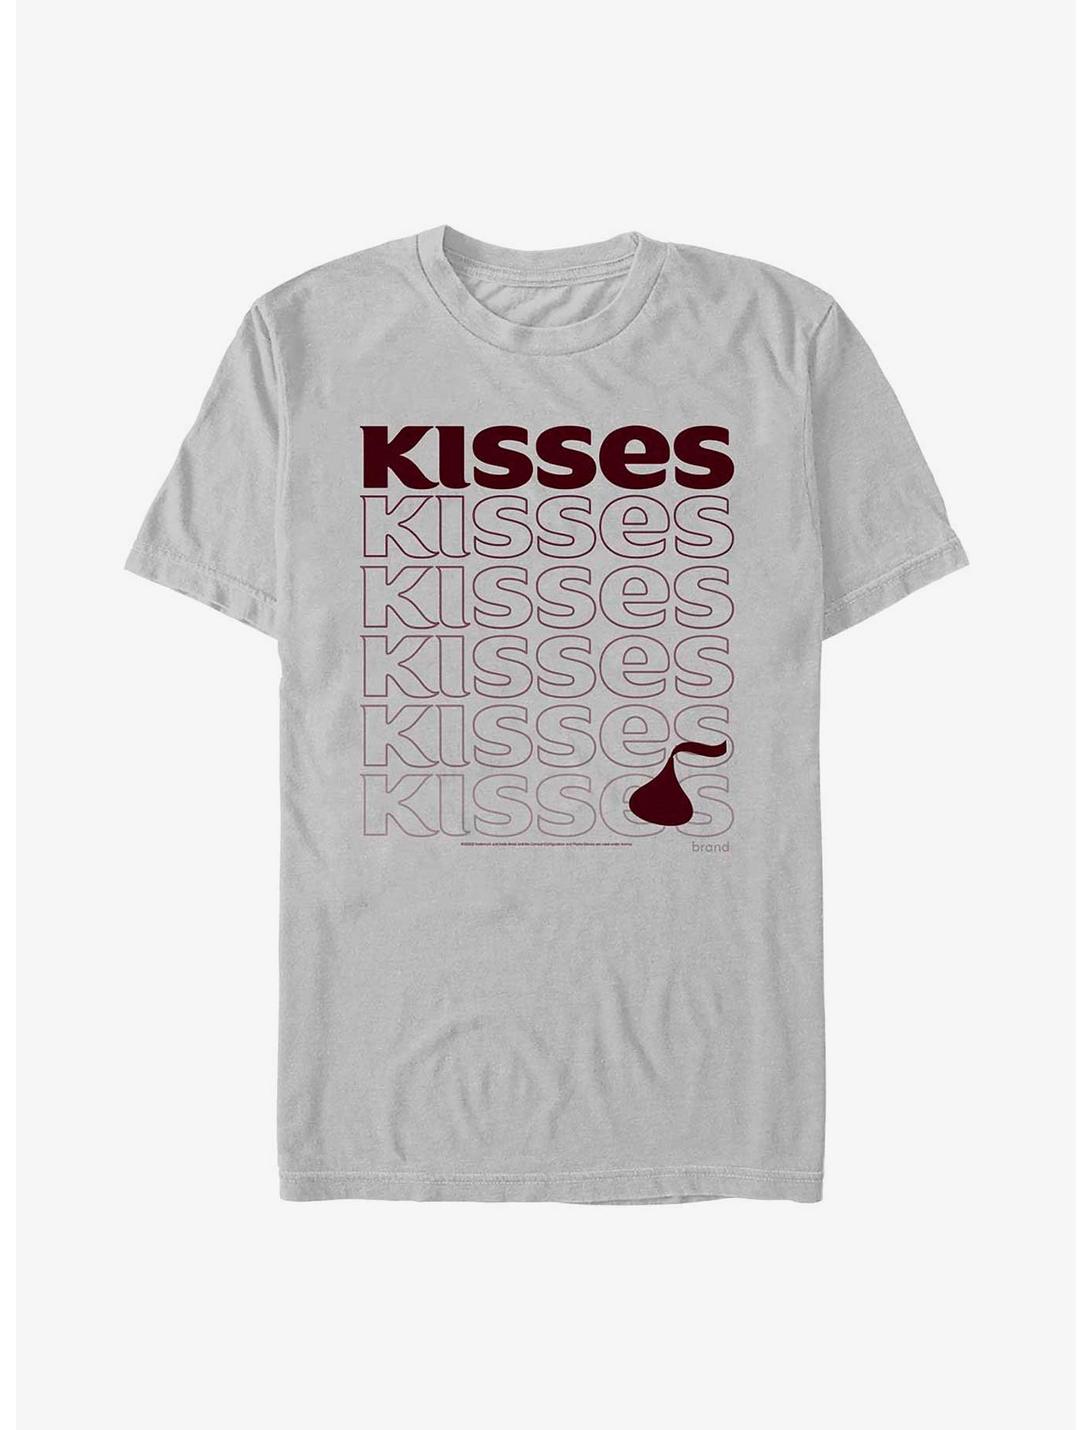 Hershey's Kisses Stacked Kisses T-Shirt, SILVER, hi-res